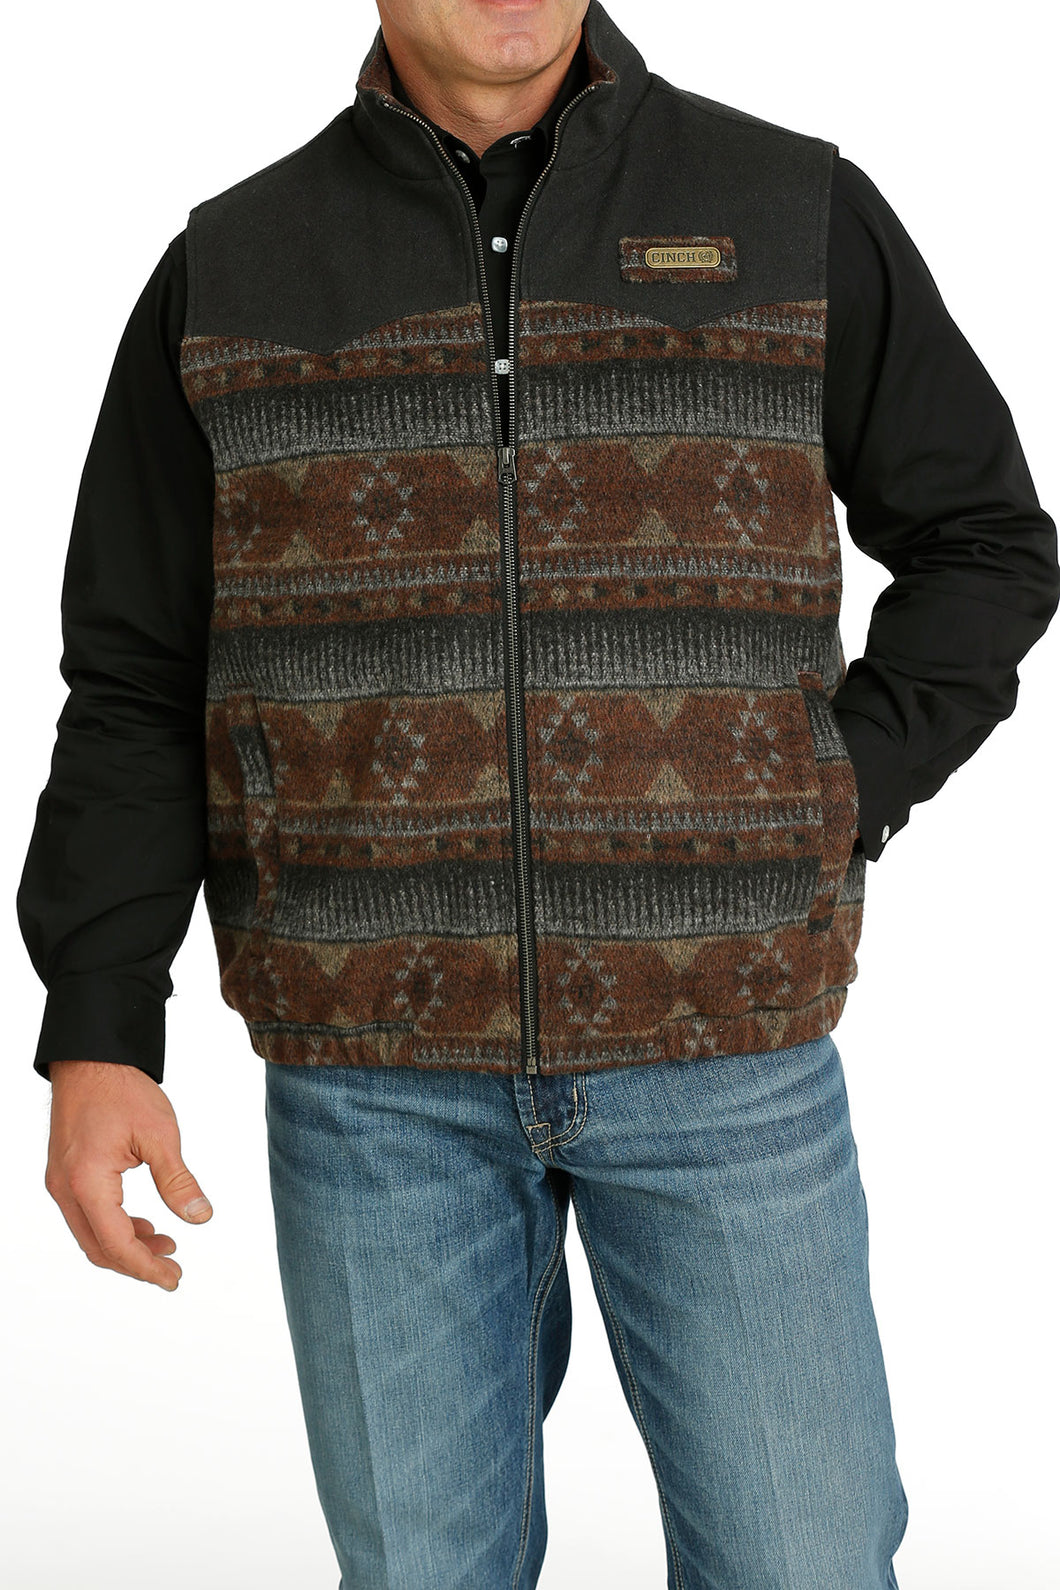 Pard's Western Shop Cinch Multi Color Aztec Print Poly Wool Conceal Carry Vest for Men